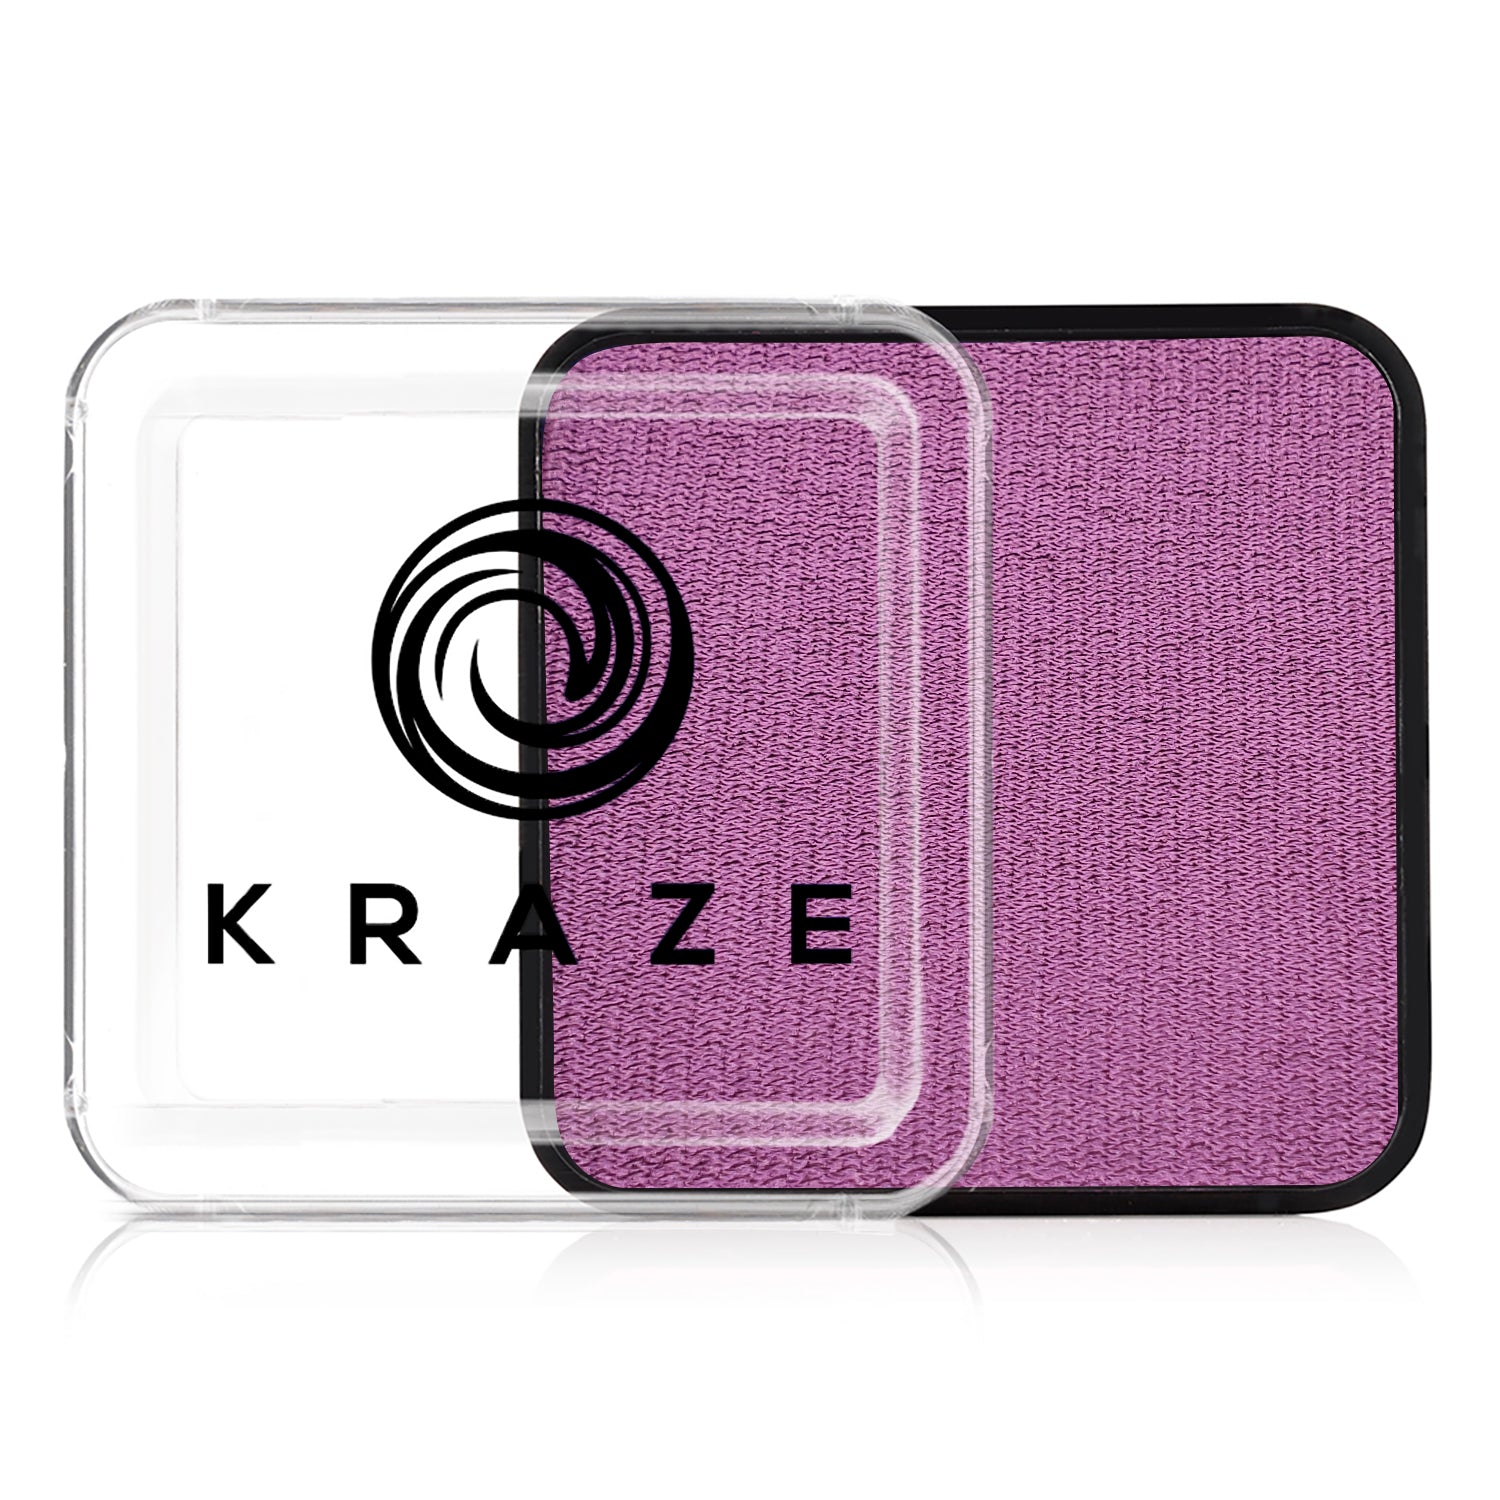 Kraze Square - Orchid (25 gm)